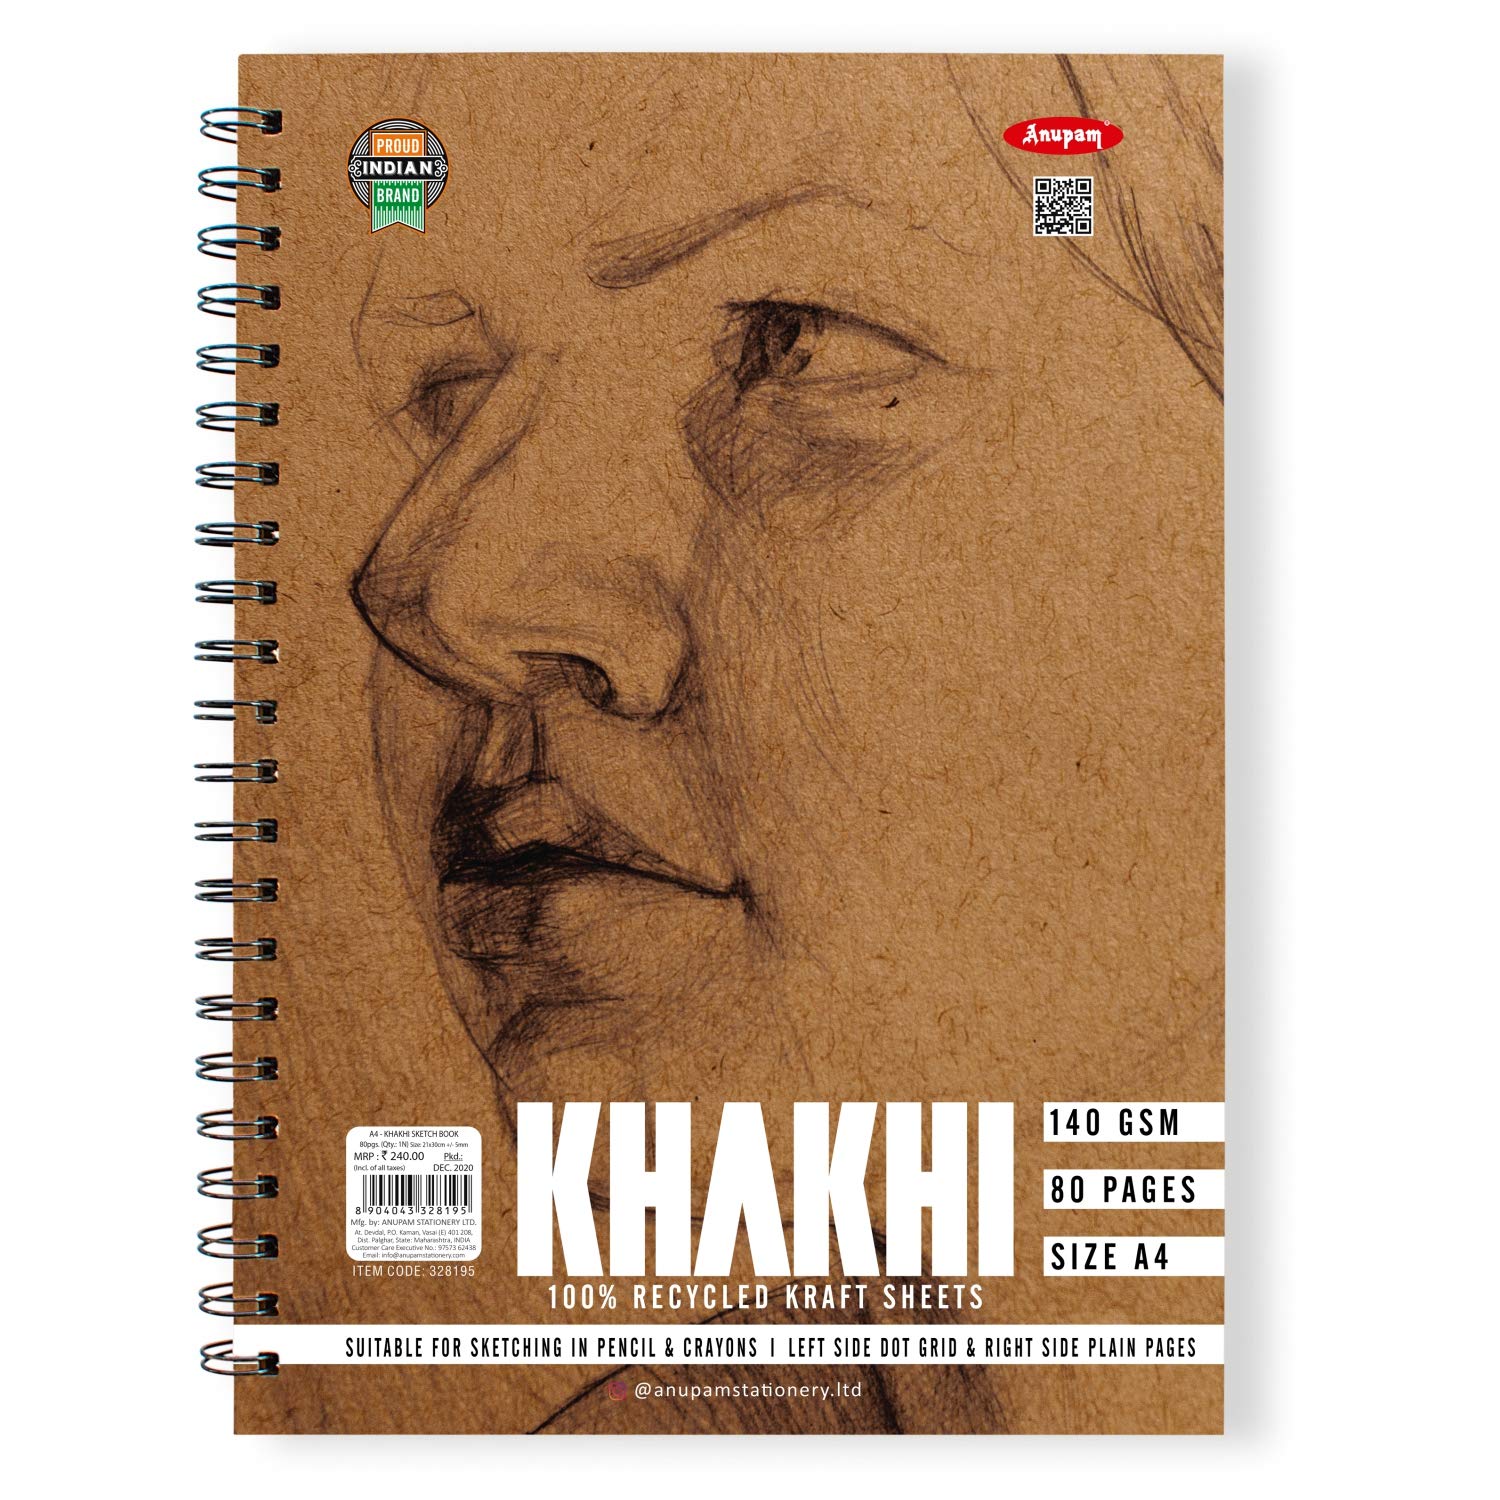 Anupam Drawing Pads Sketch Book A4 Size Drawing Paper 140gsm (Khaki)